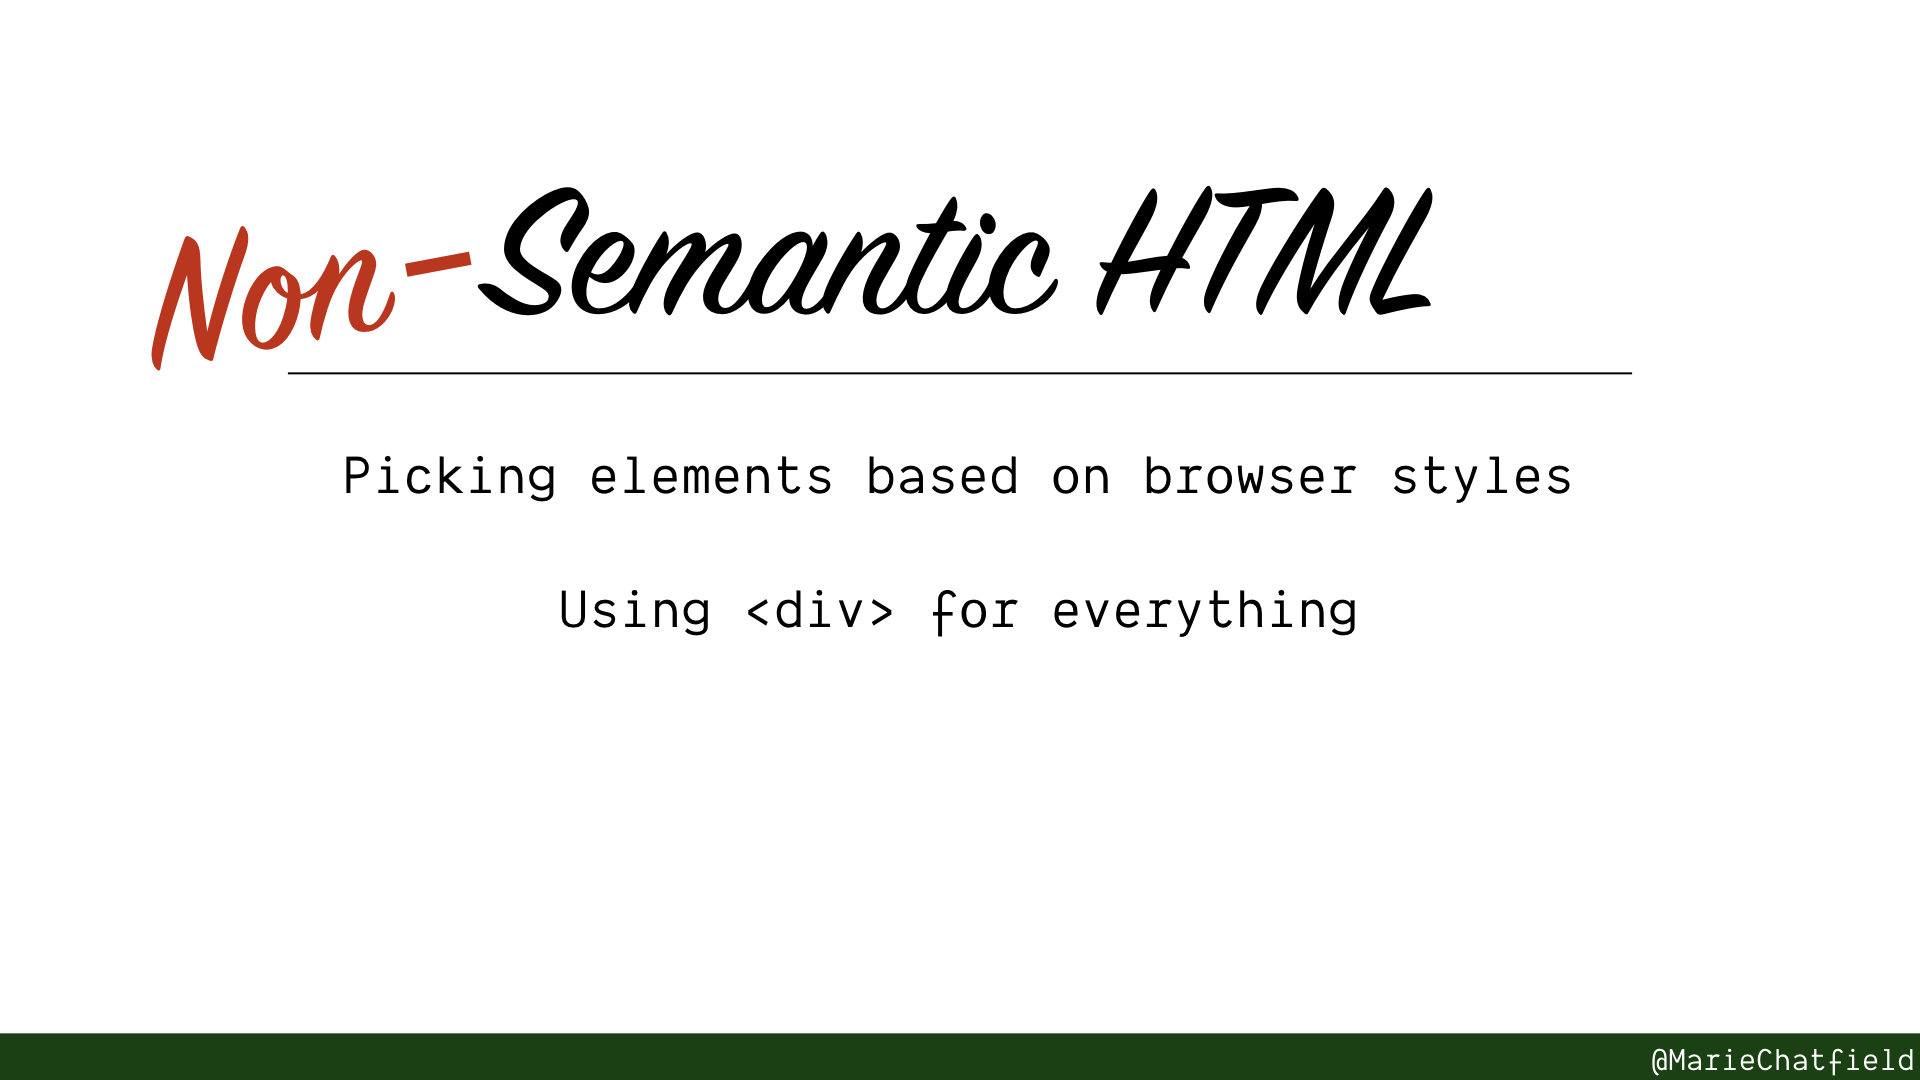 Non-Semantic HTML examples